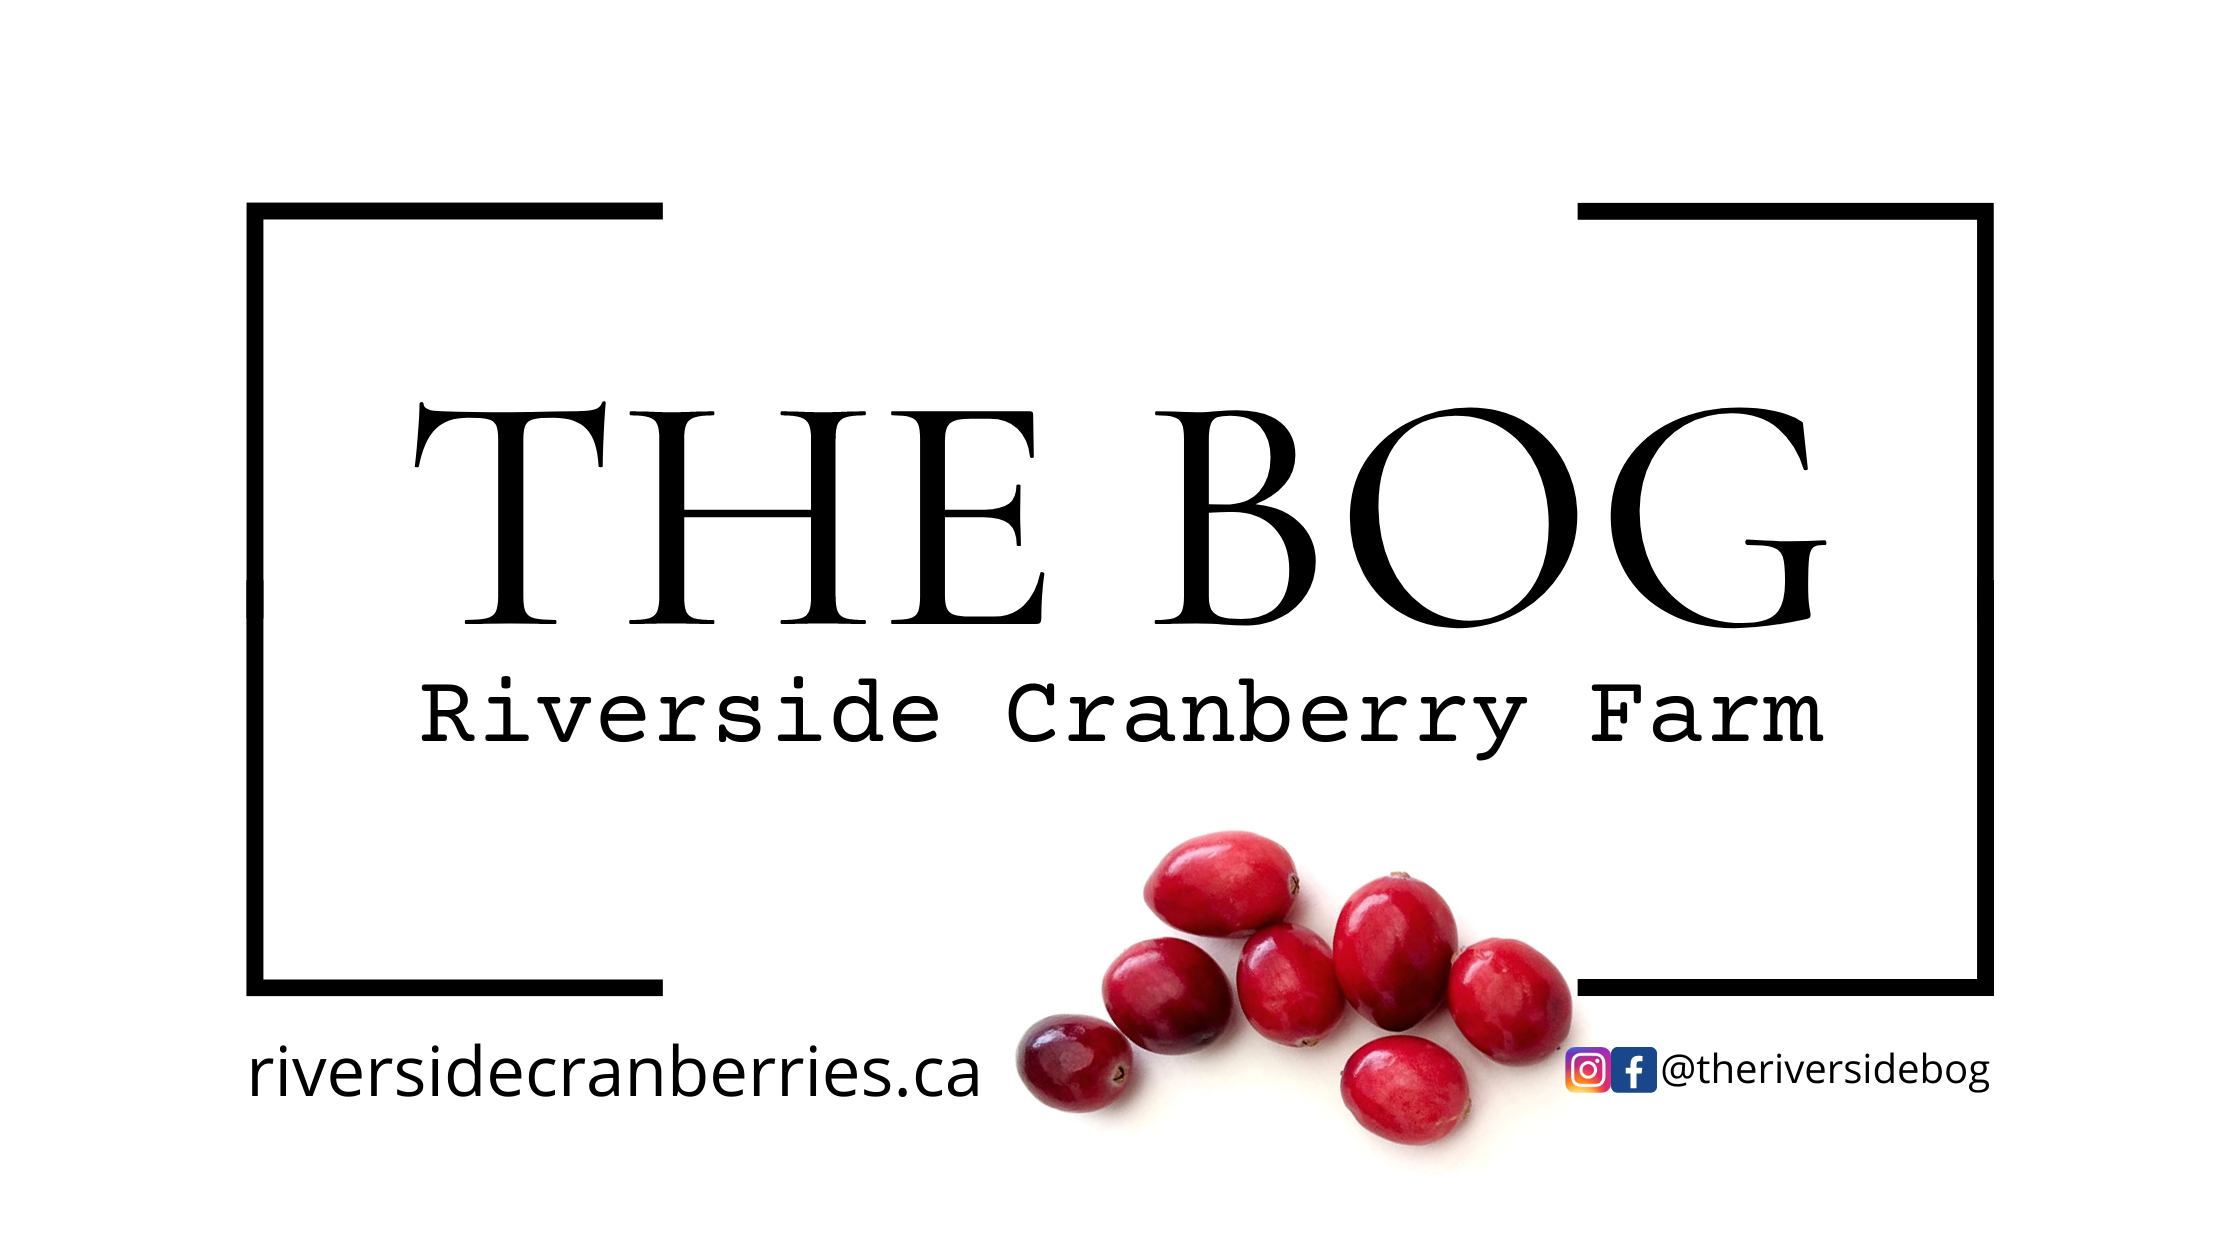 THE BOG Riverside Cranberry Farm logo image.